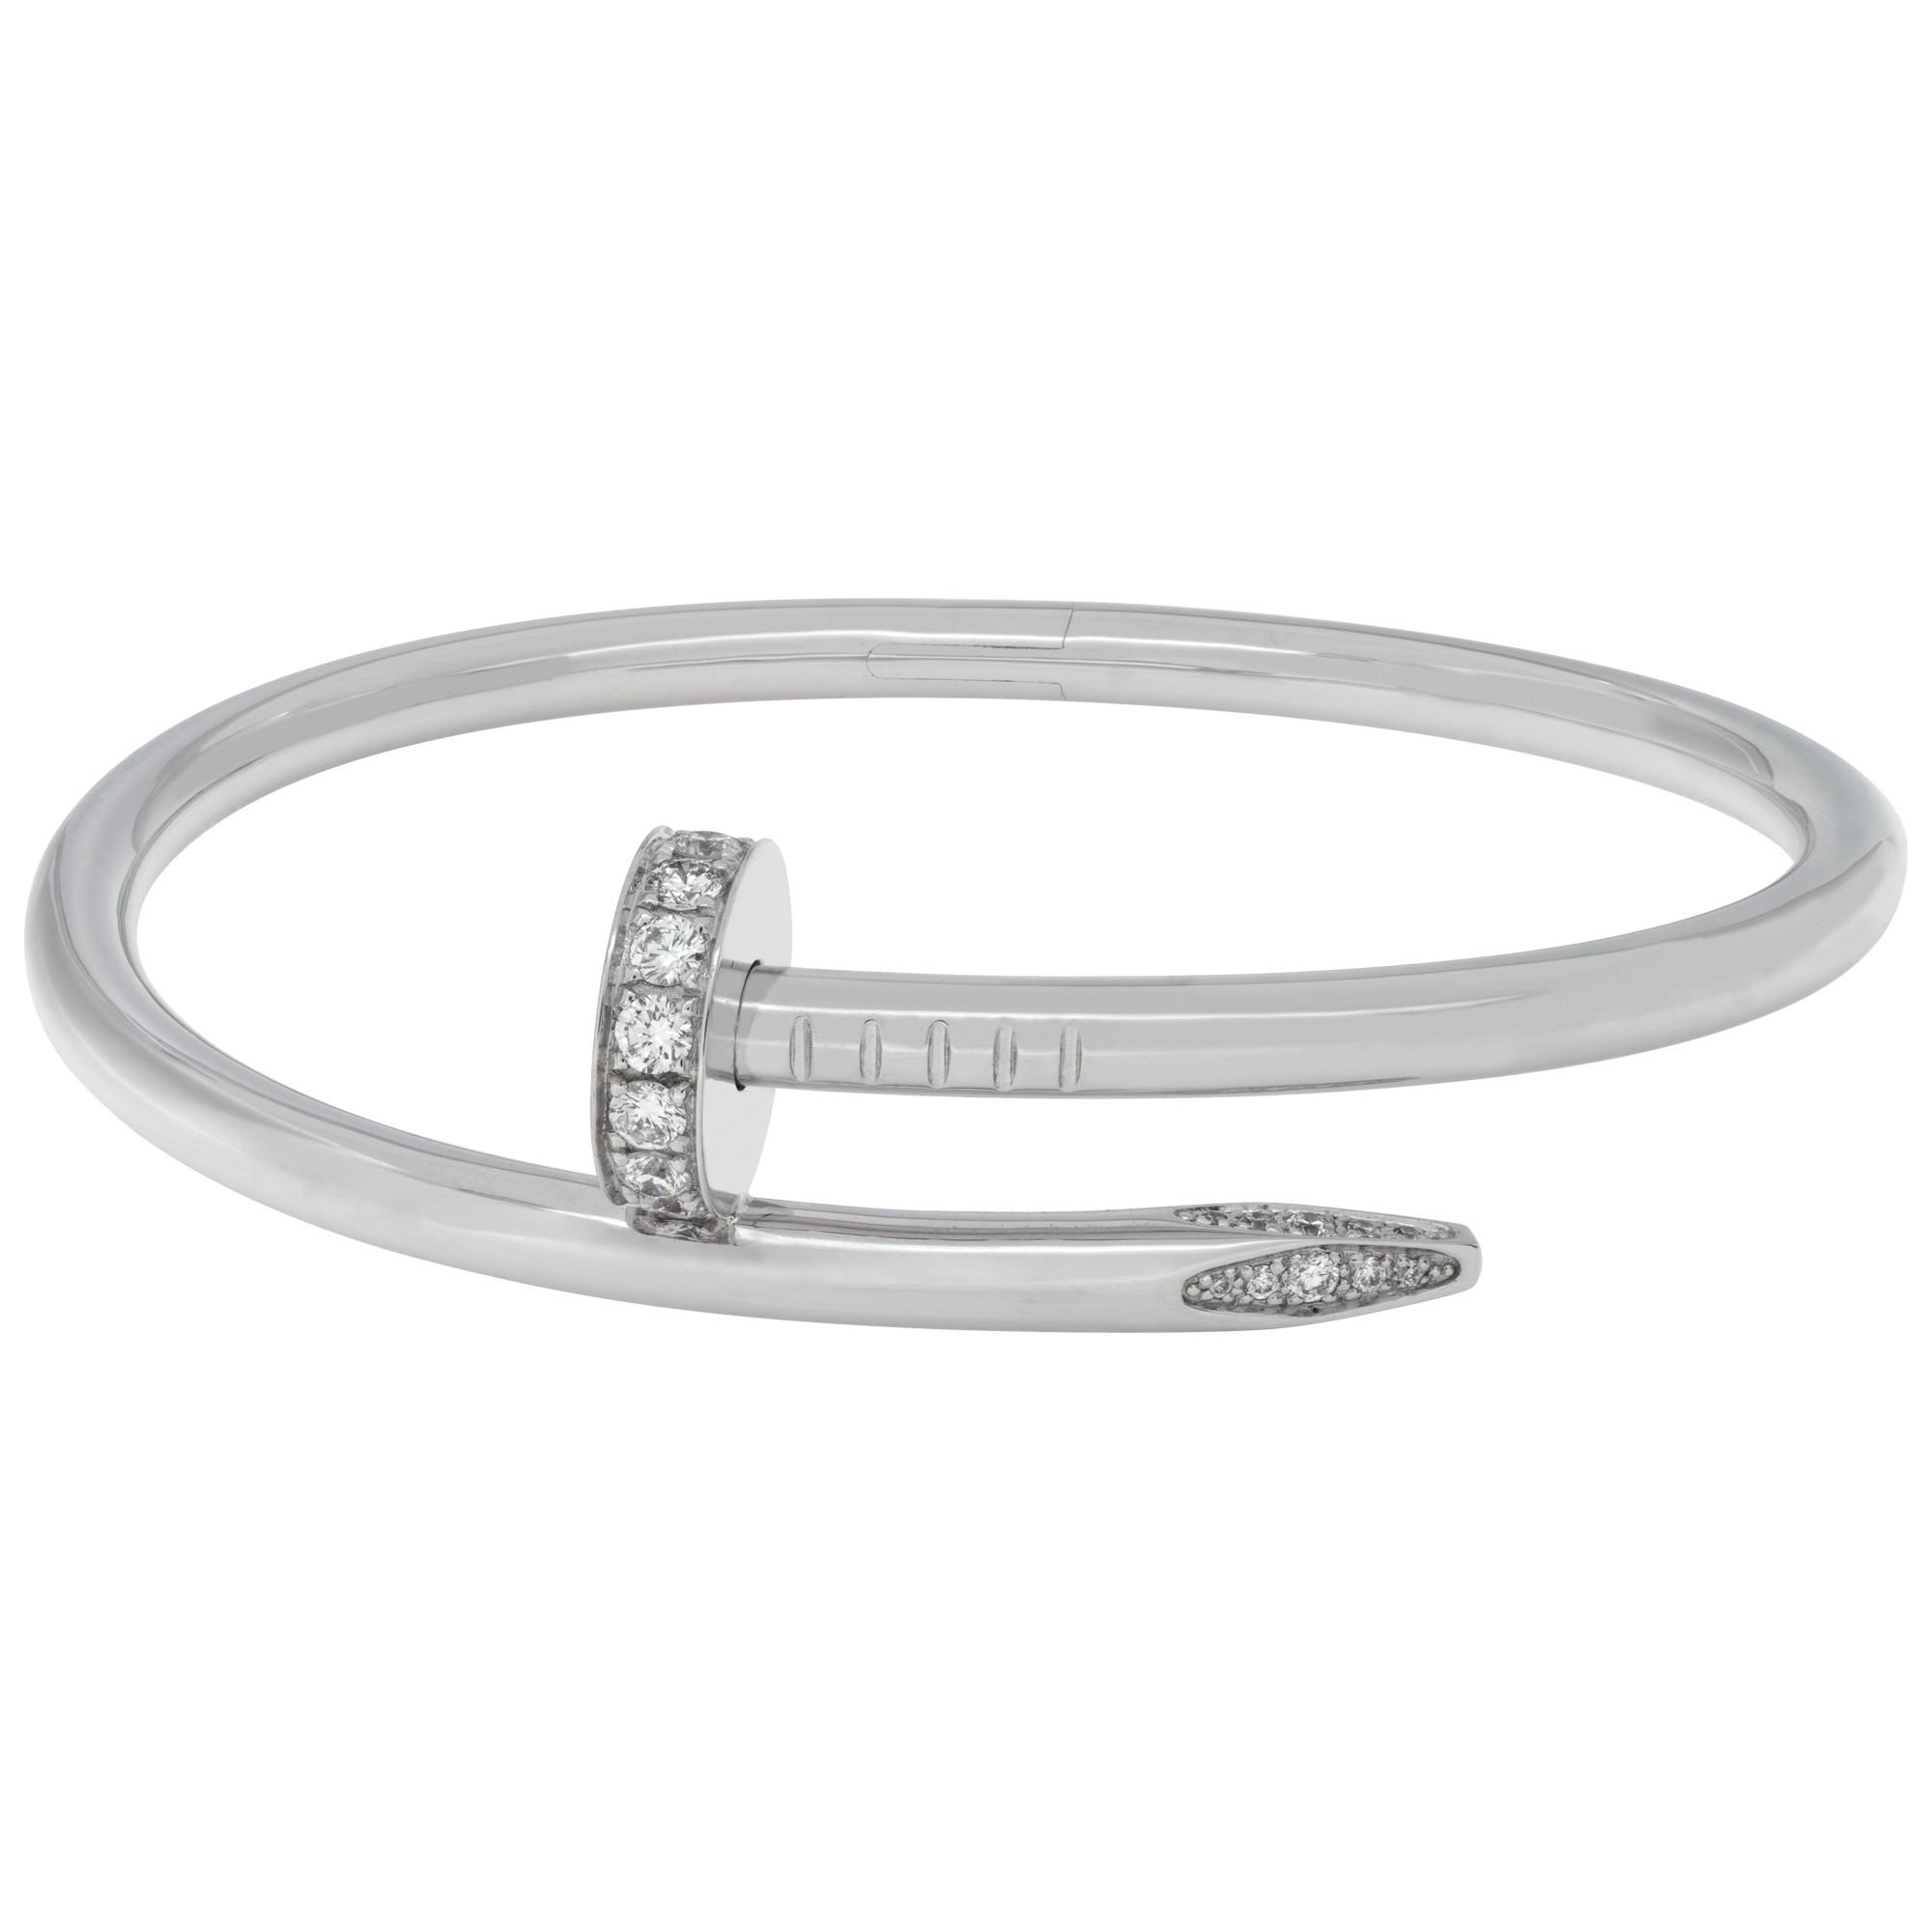 Cartier Juste Un Clou bracelet in 18k white gold with 0.58 carat in diamonds, size 15